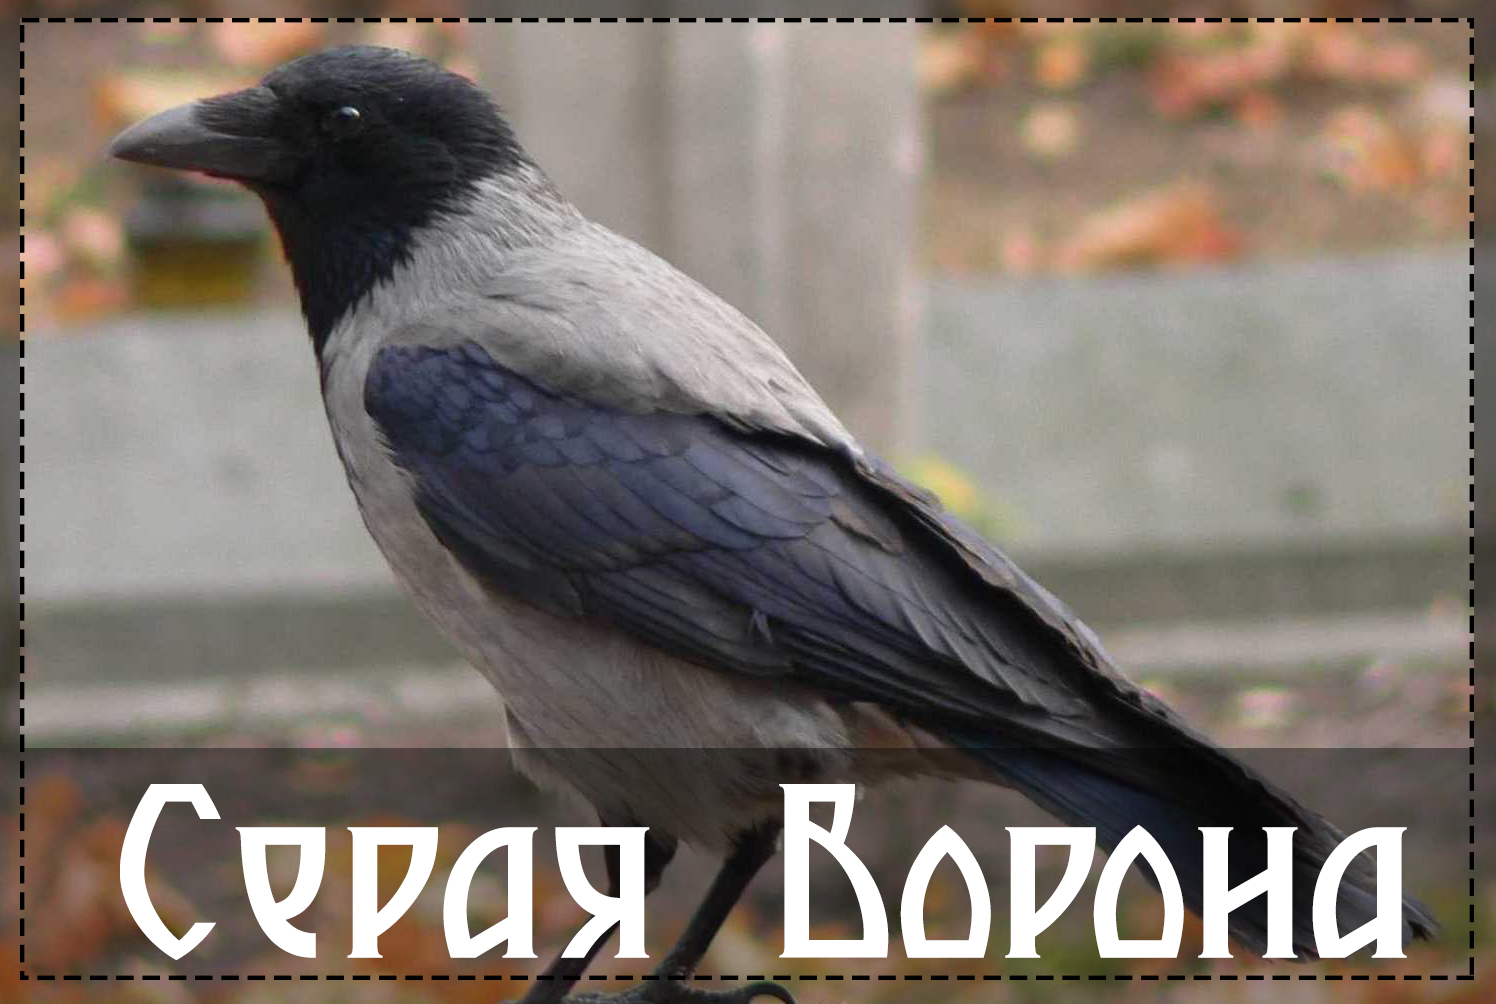 Varieties of crows and ravens - Crow, Crow, Birds, Corvids, Longpost